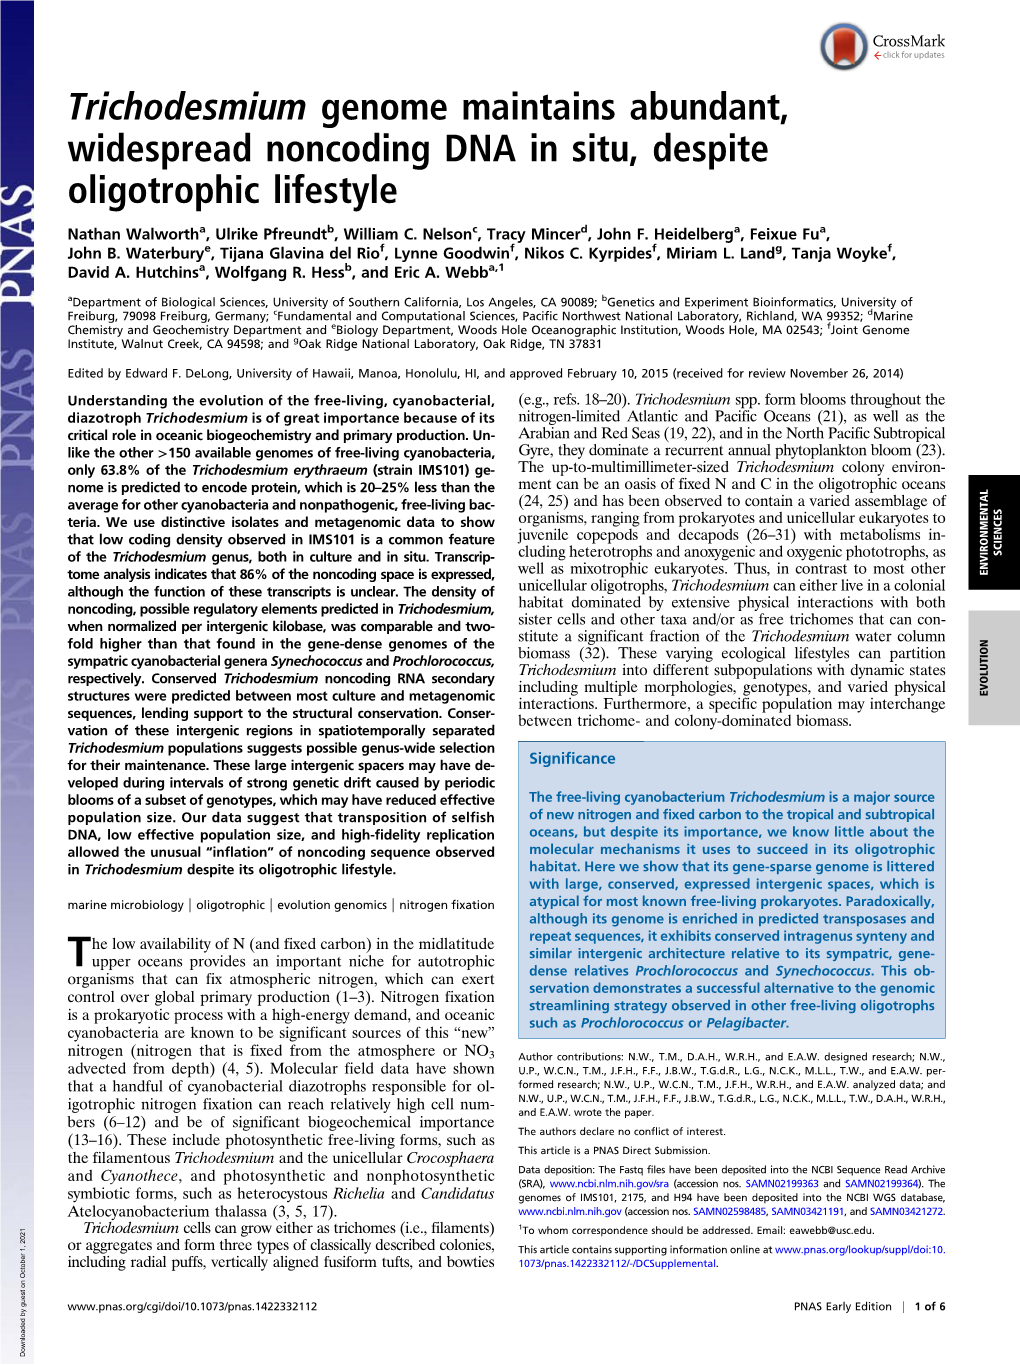 Trichodesmium Genome Maintains Abundant, Widespread Noncoding DNA in Situ, Despite Oligotrophic Lifestyle